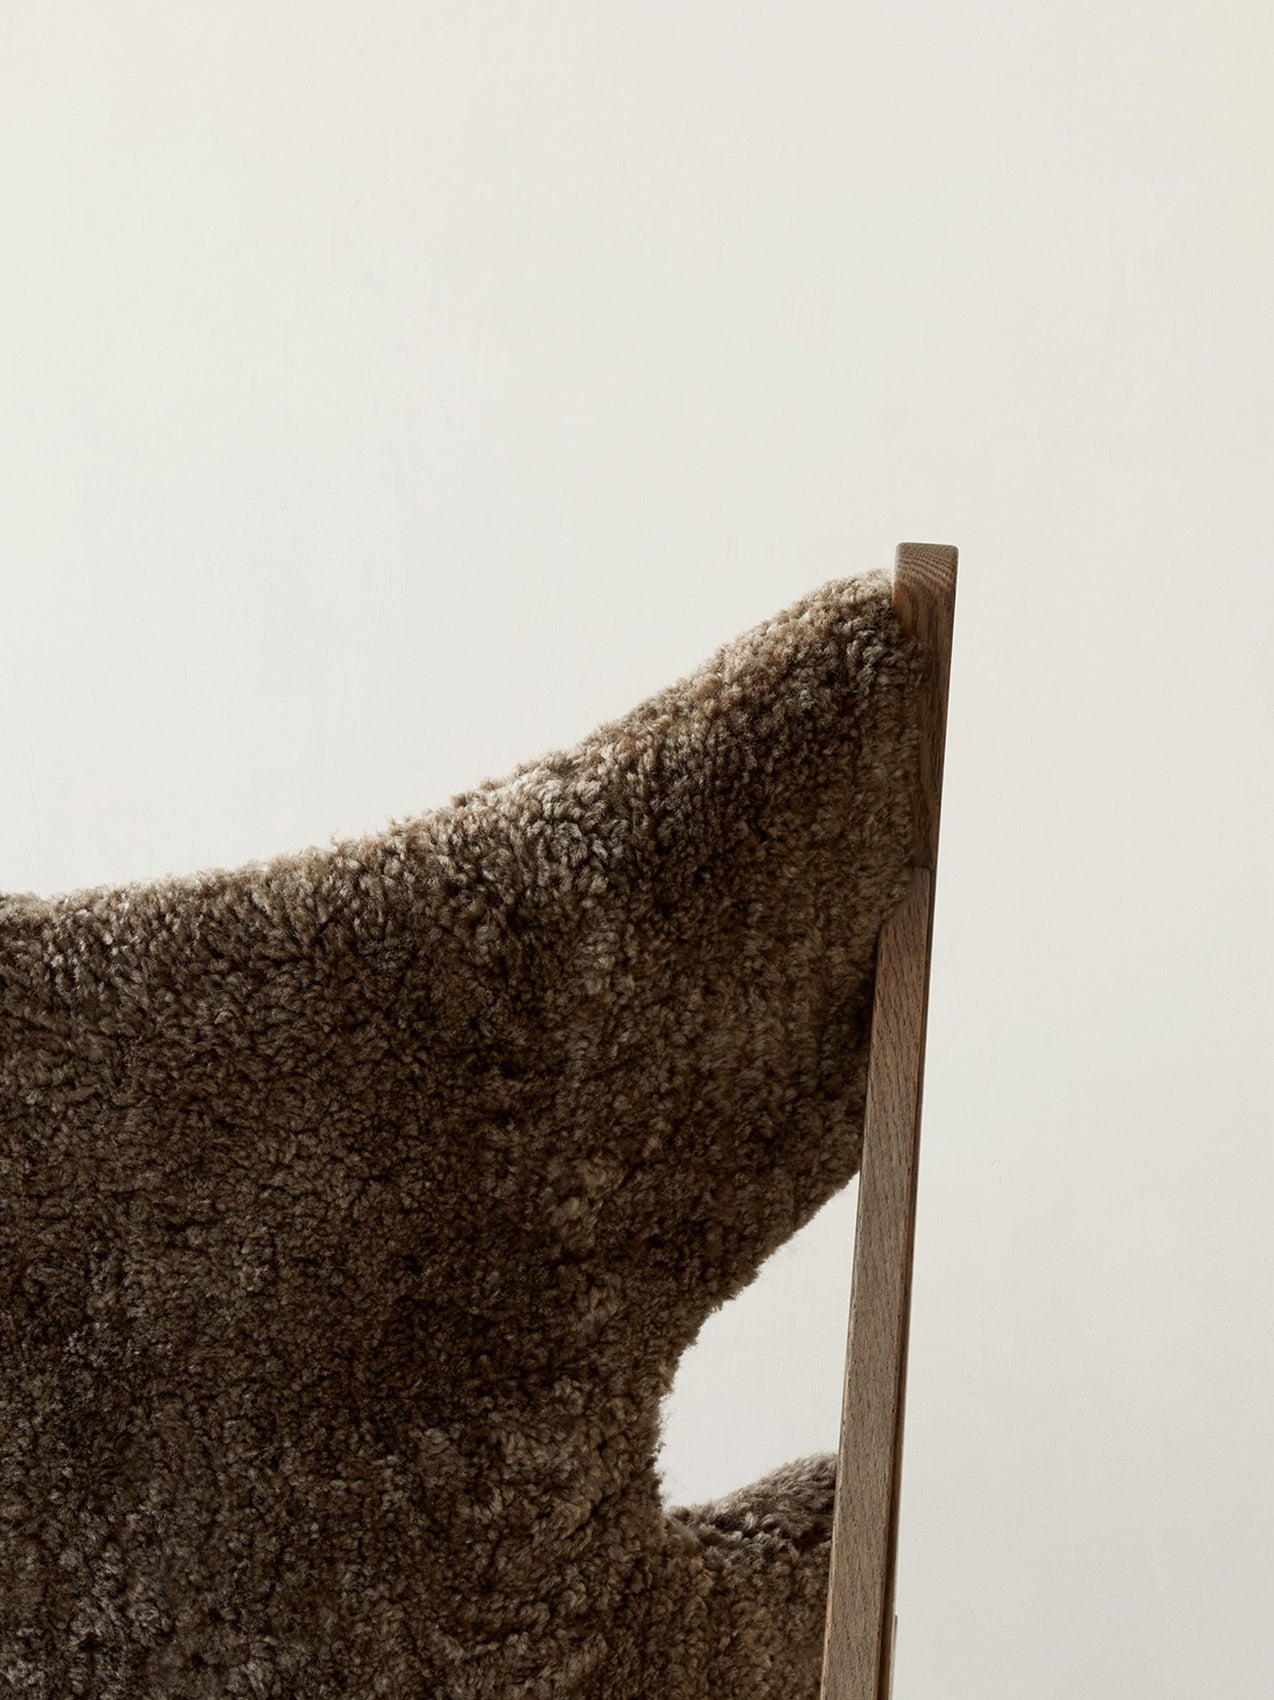 Knitting Lounge Chair, Sheepskin